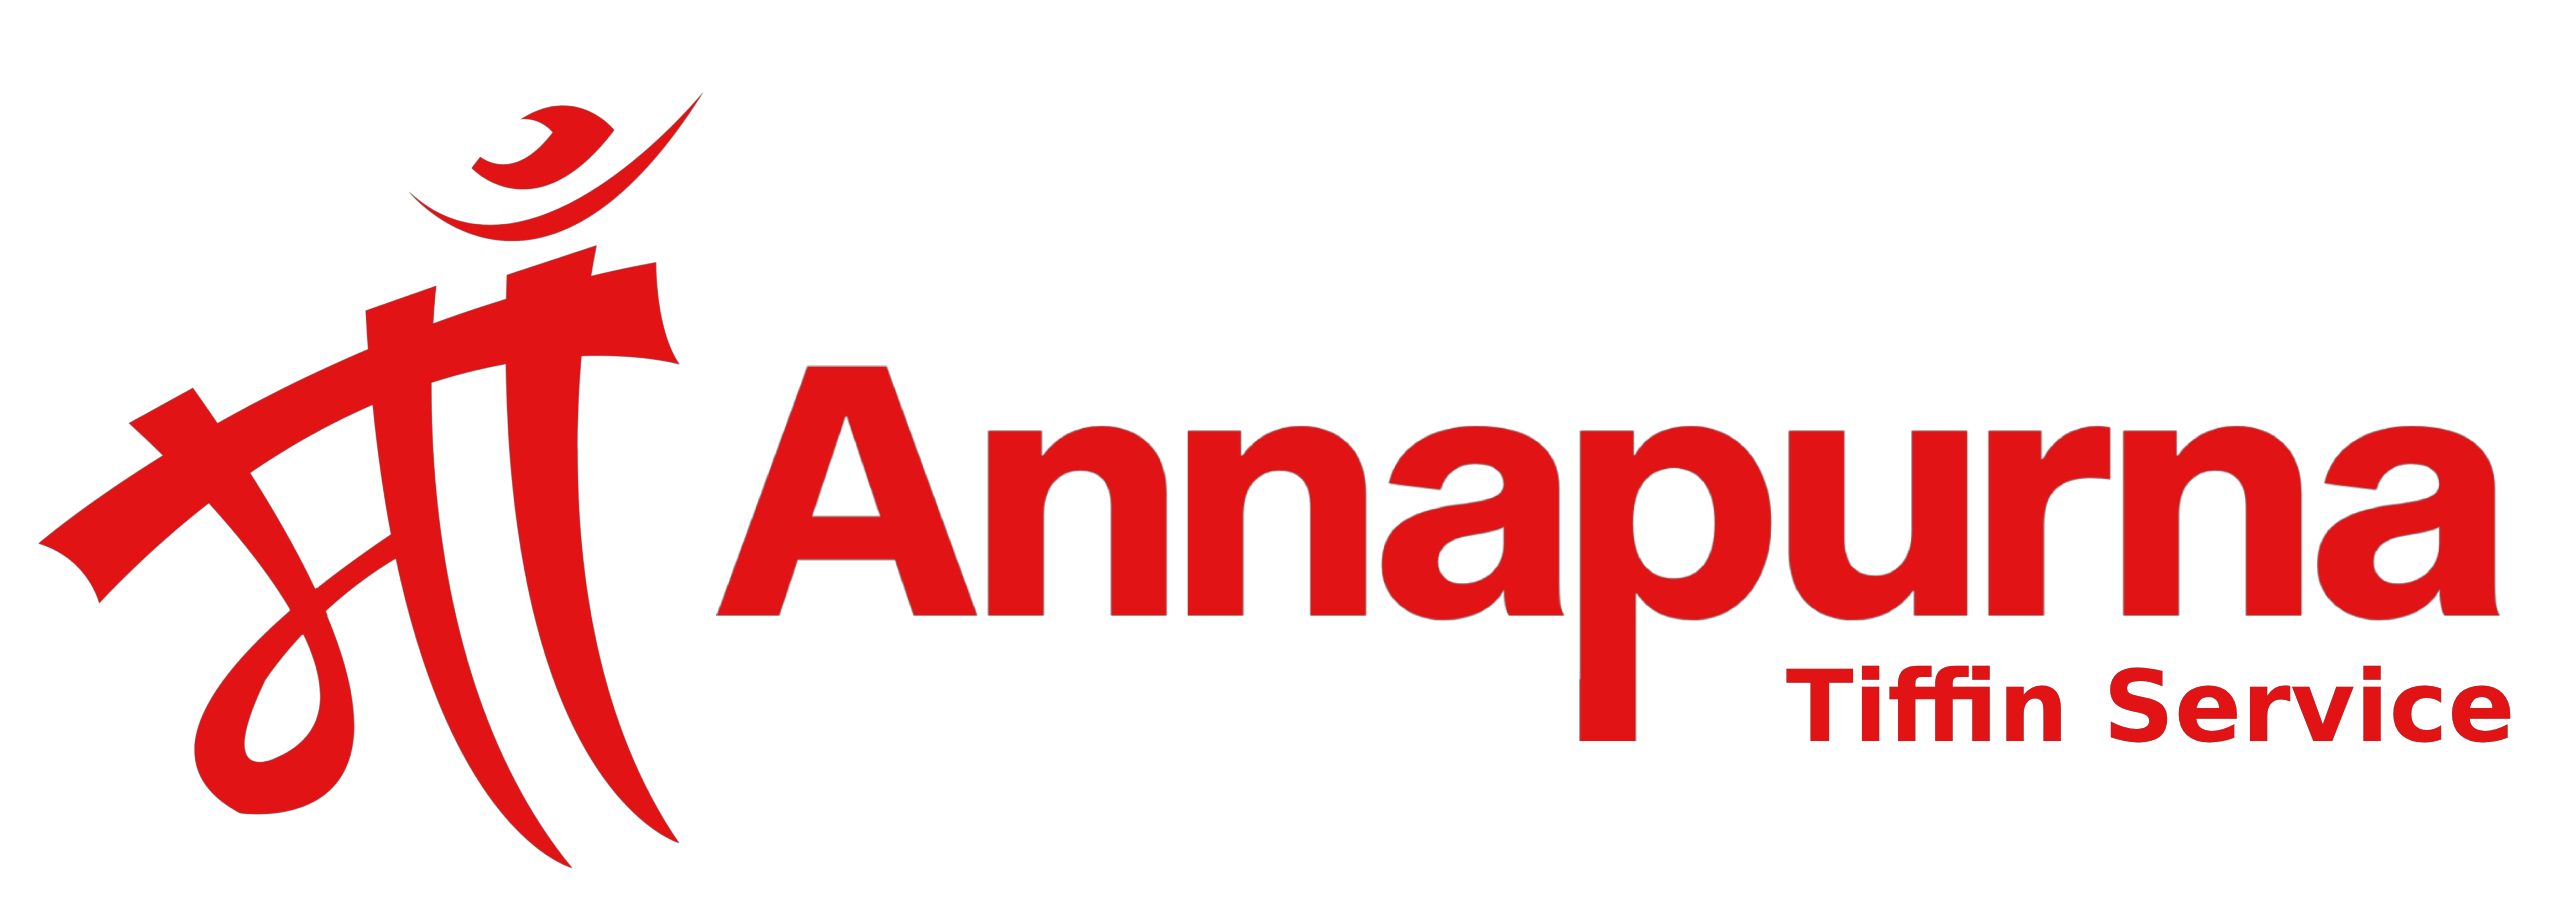 Annapurna Logo Stock Photos and Images - 123RF